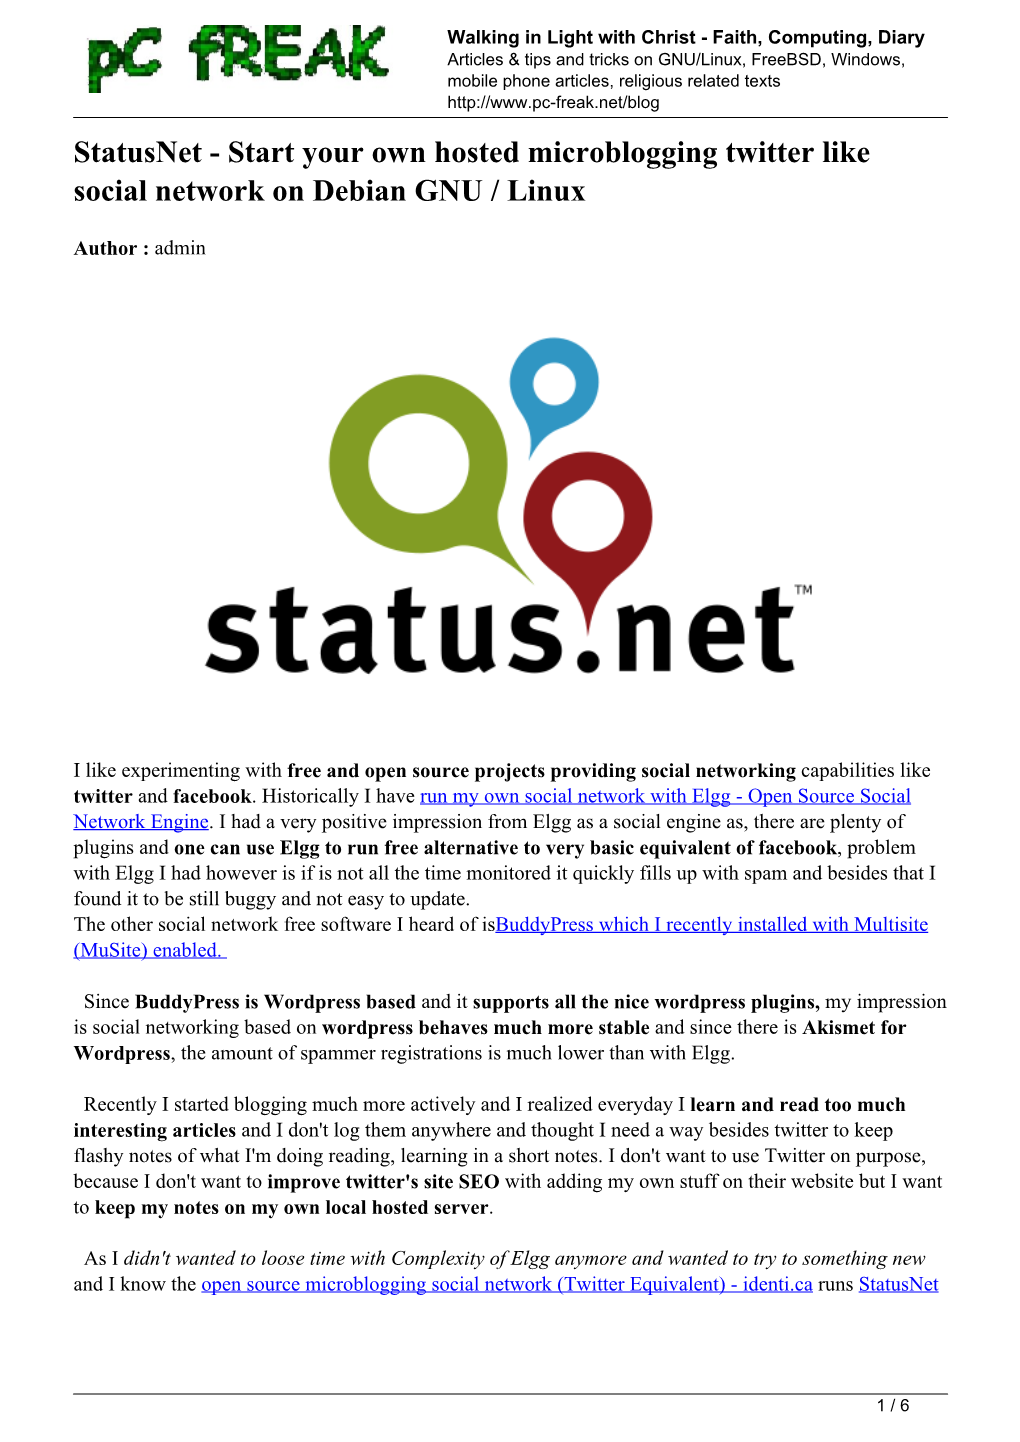 Statusnet - Start Your Own Hosted Microblogging Twitter Like Social Network on Debian GNU / Linux